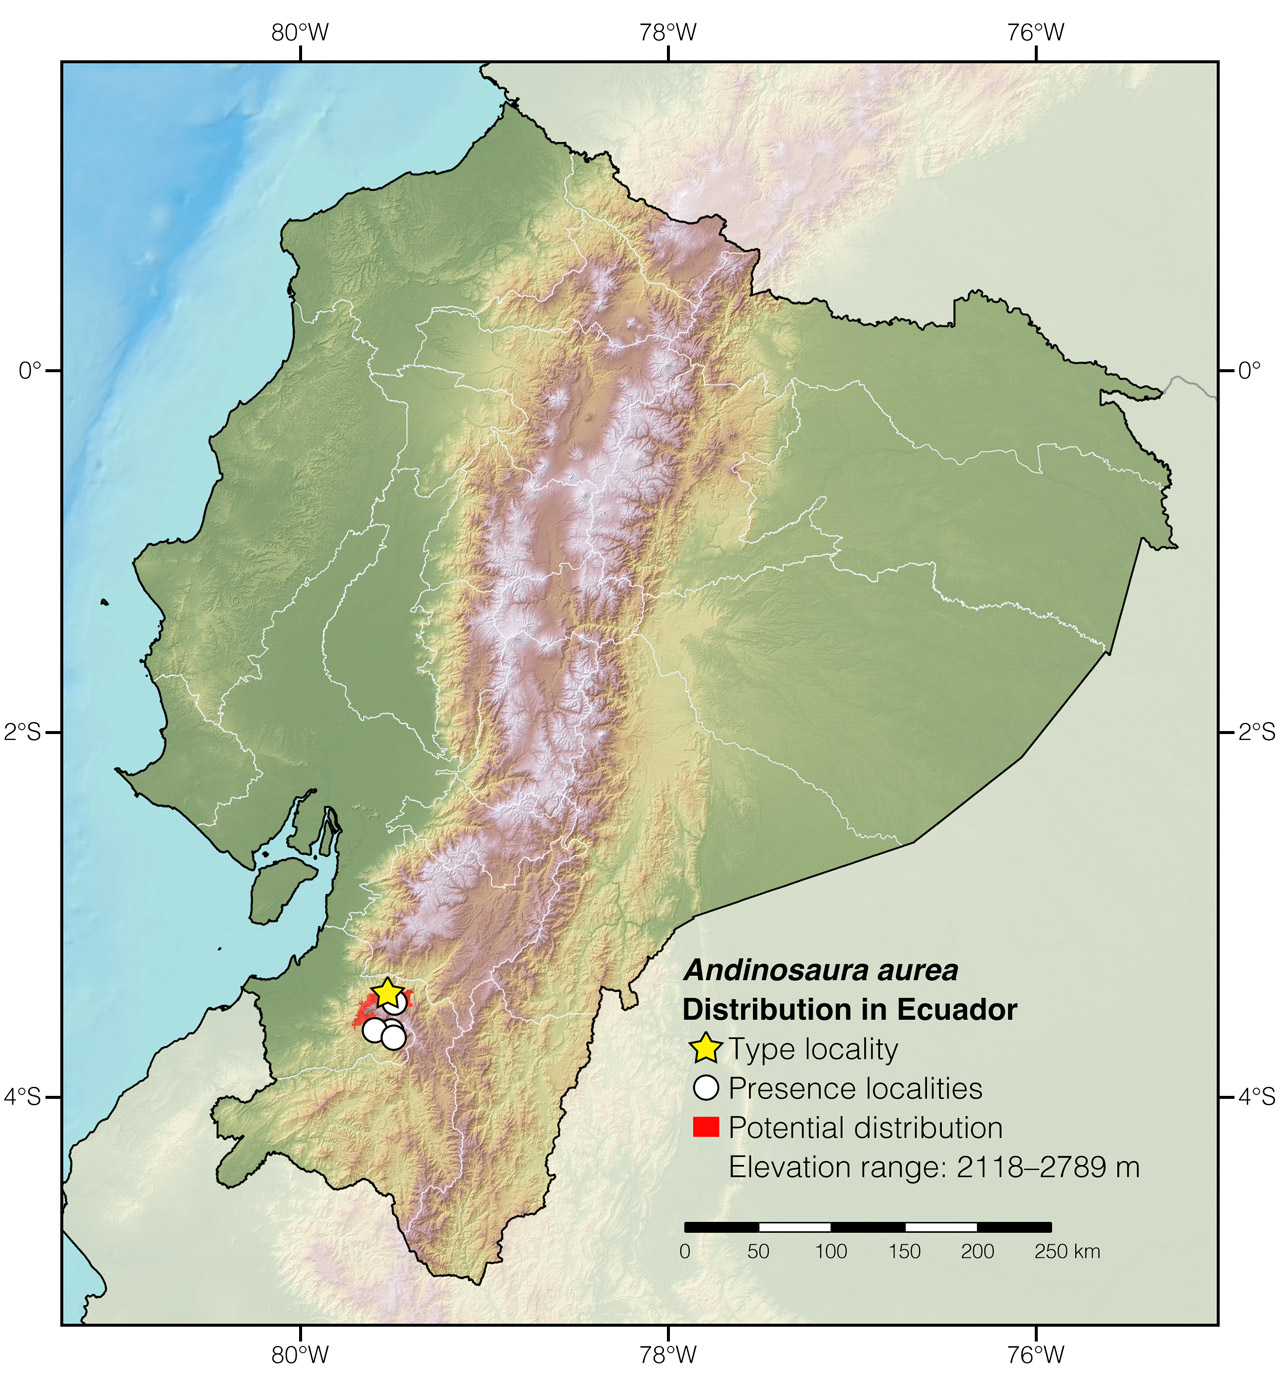 Distribution of Andinosaura aurea in Ecuador